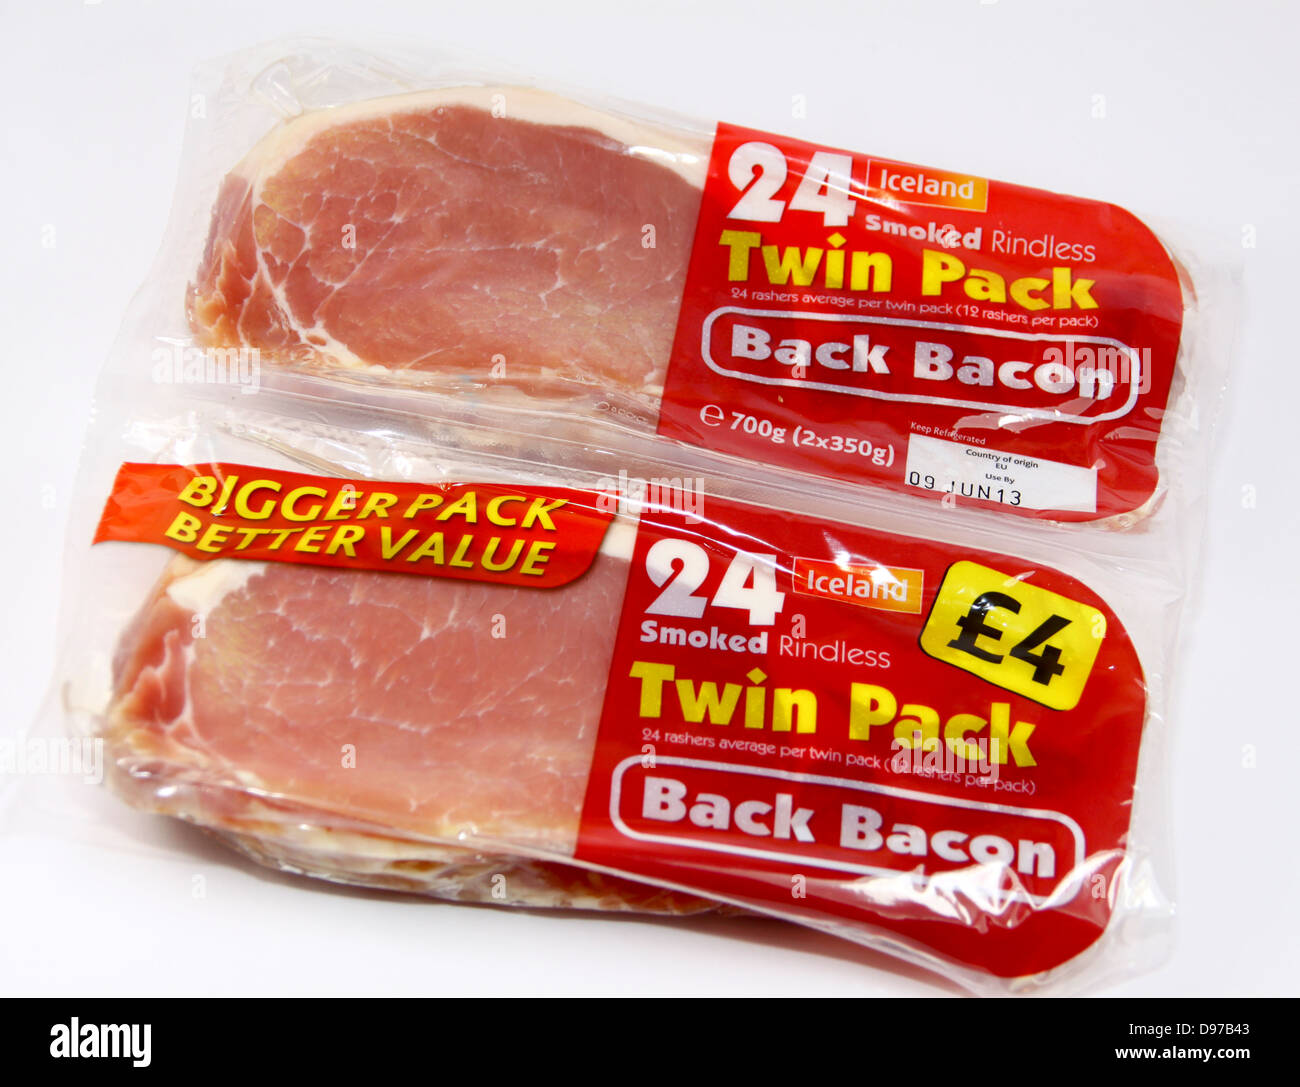 24 rasher twin pack Iceland smoked bacon Stock Photo